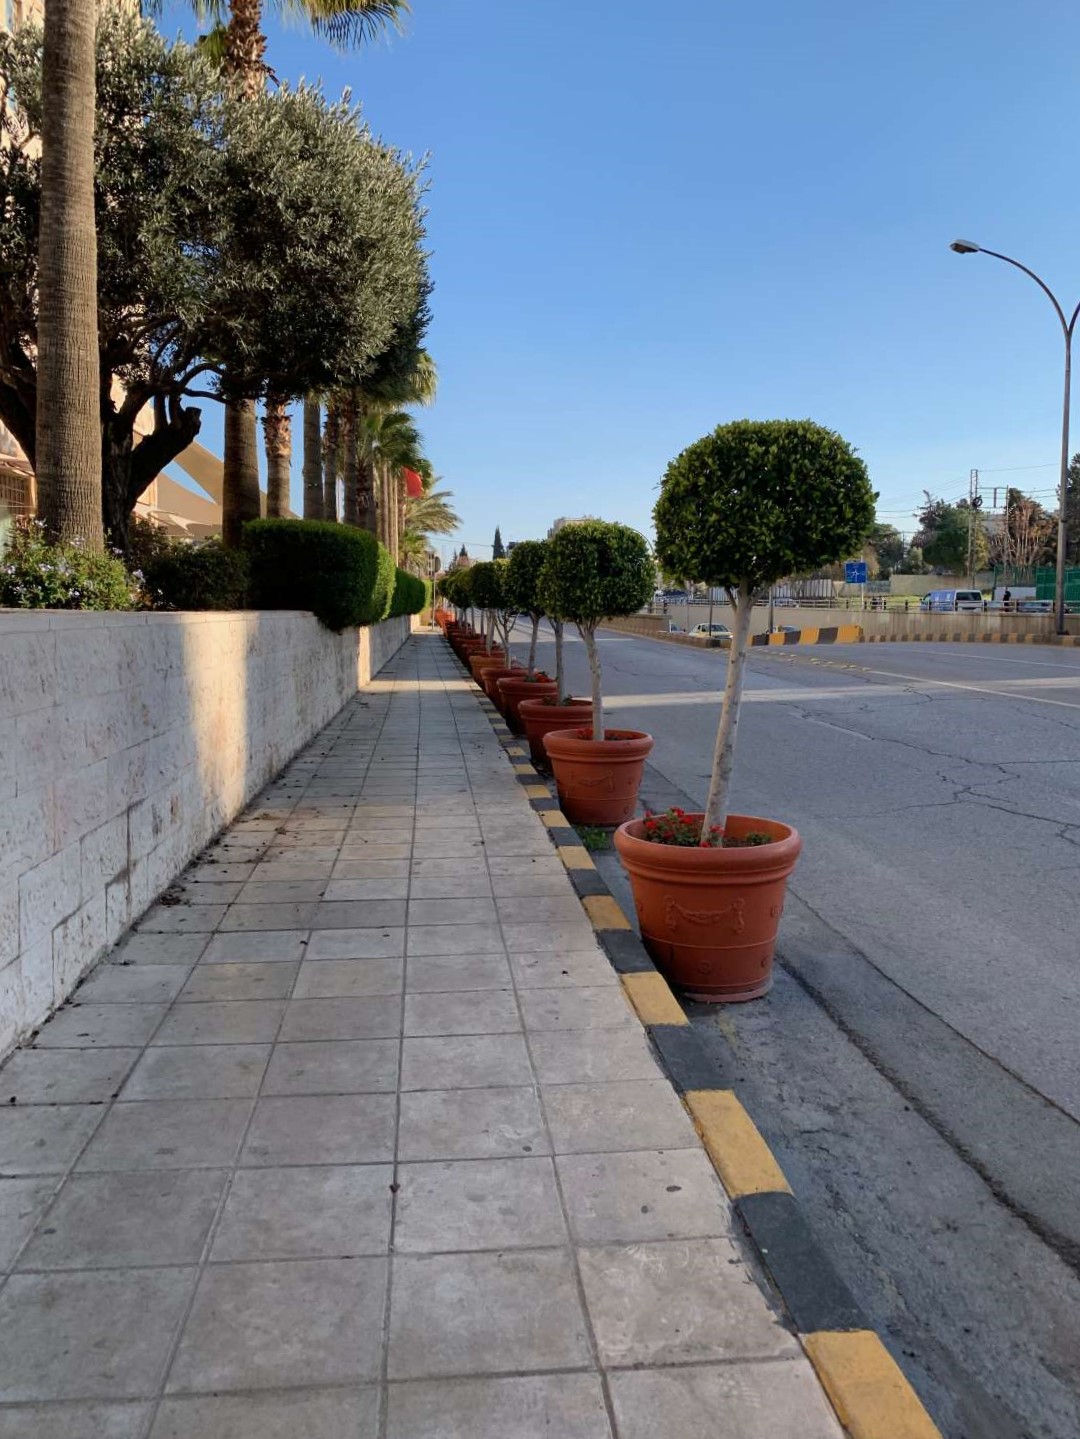 View of sidewalk and potted plants on&nbsp;Al Kuroum Avenue (شارع الكروم)&nbsp;